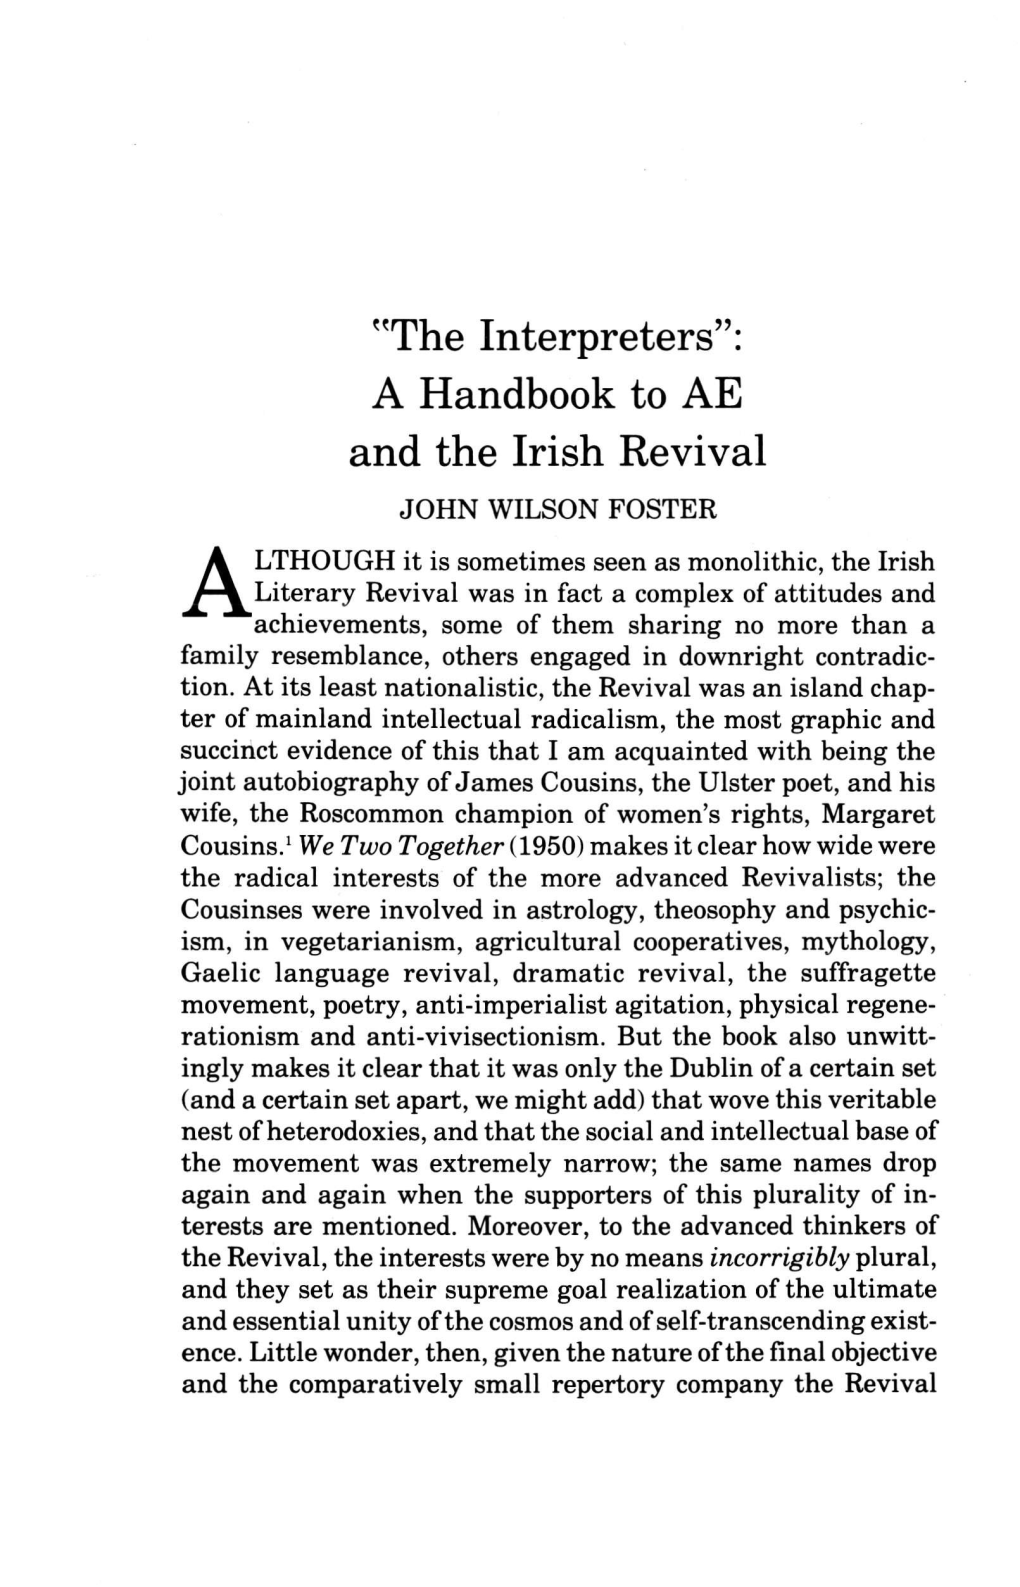 "The Interpreters": a Handbook to AE and the Irish Revival JOHN WILSON FOSTER